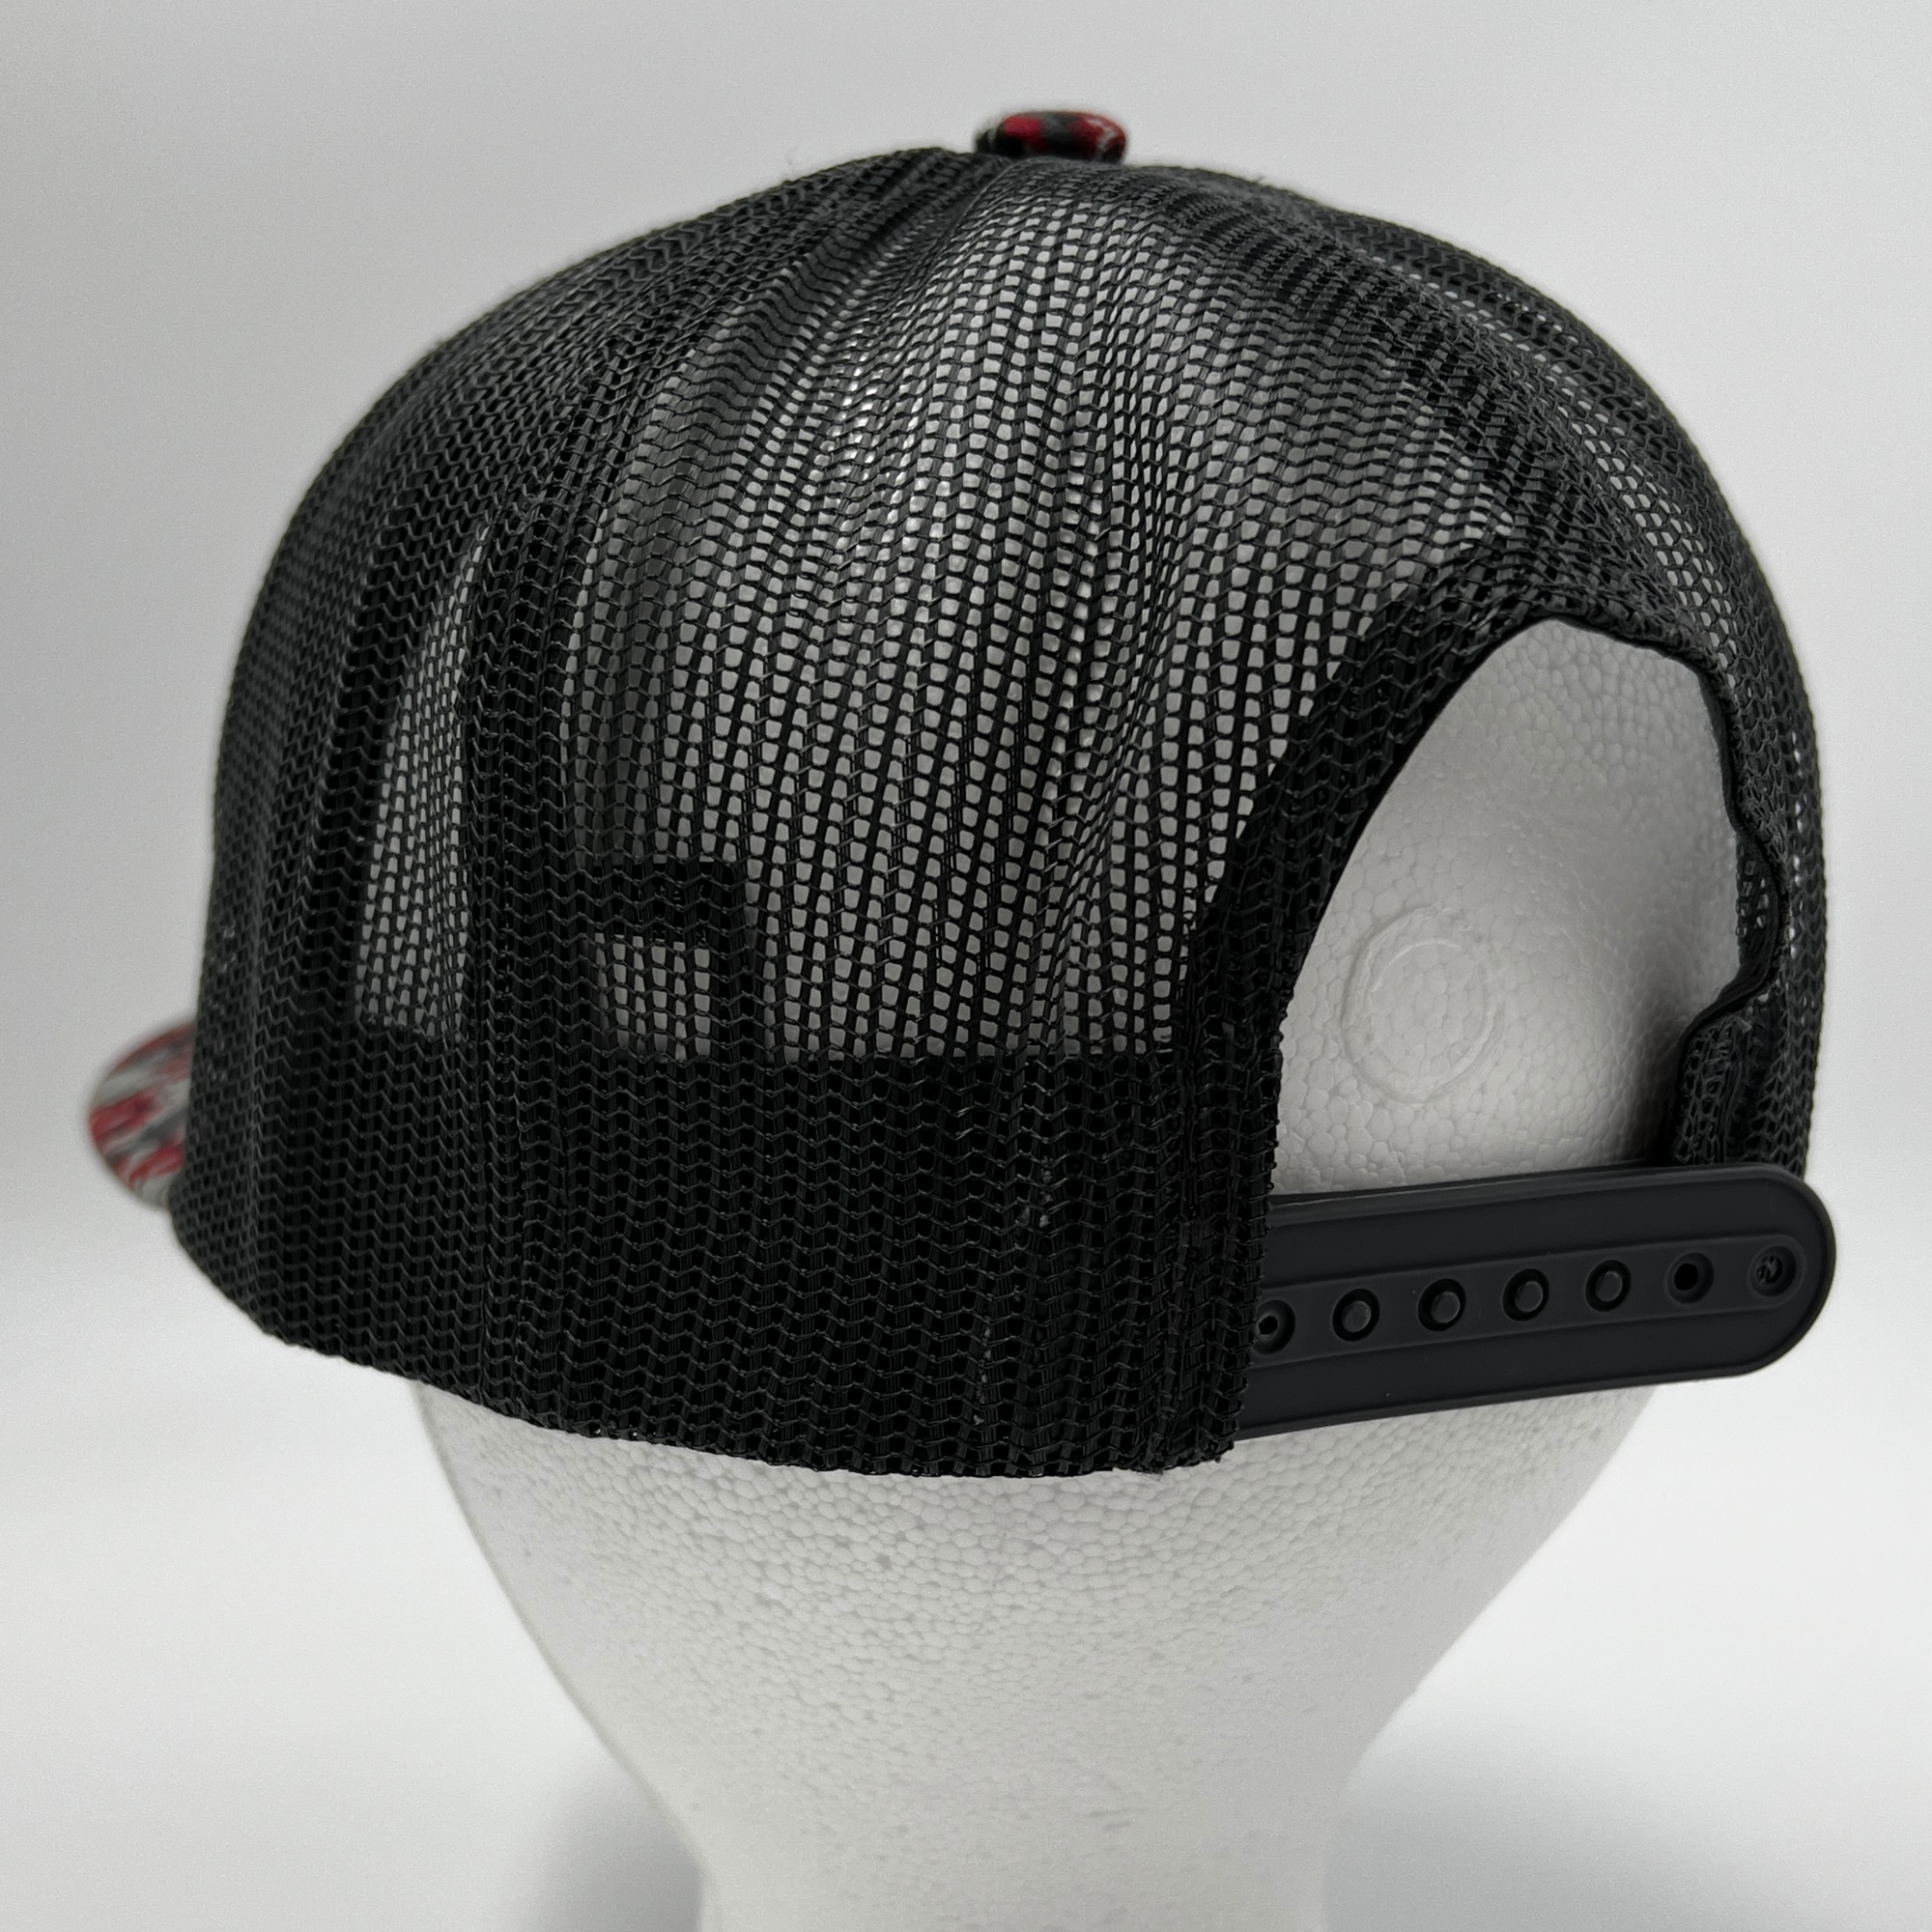 BFLO Red &amp; Black Digital Camo Adjustable Mesh Snapback Hat